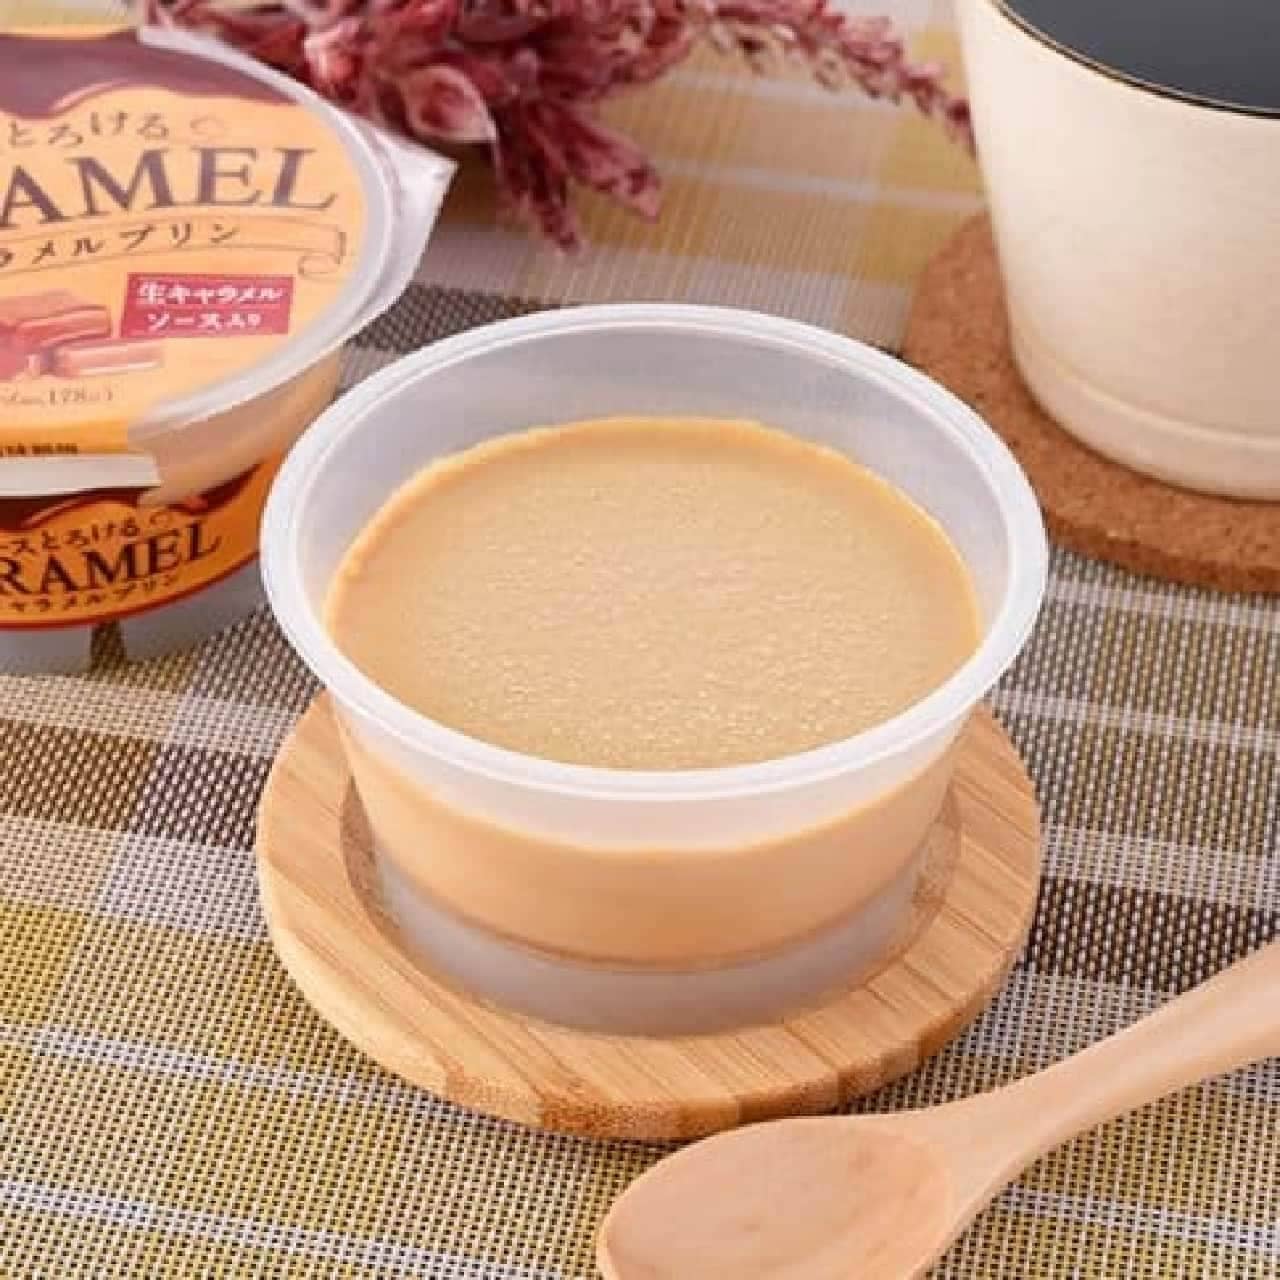 FamilyMart "Raw caramel pudding with melting sauce"